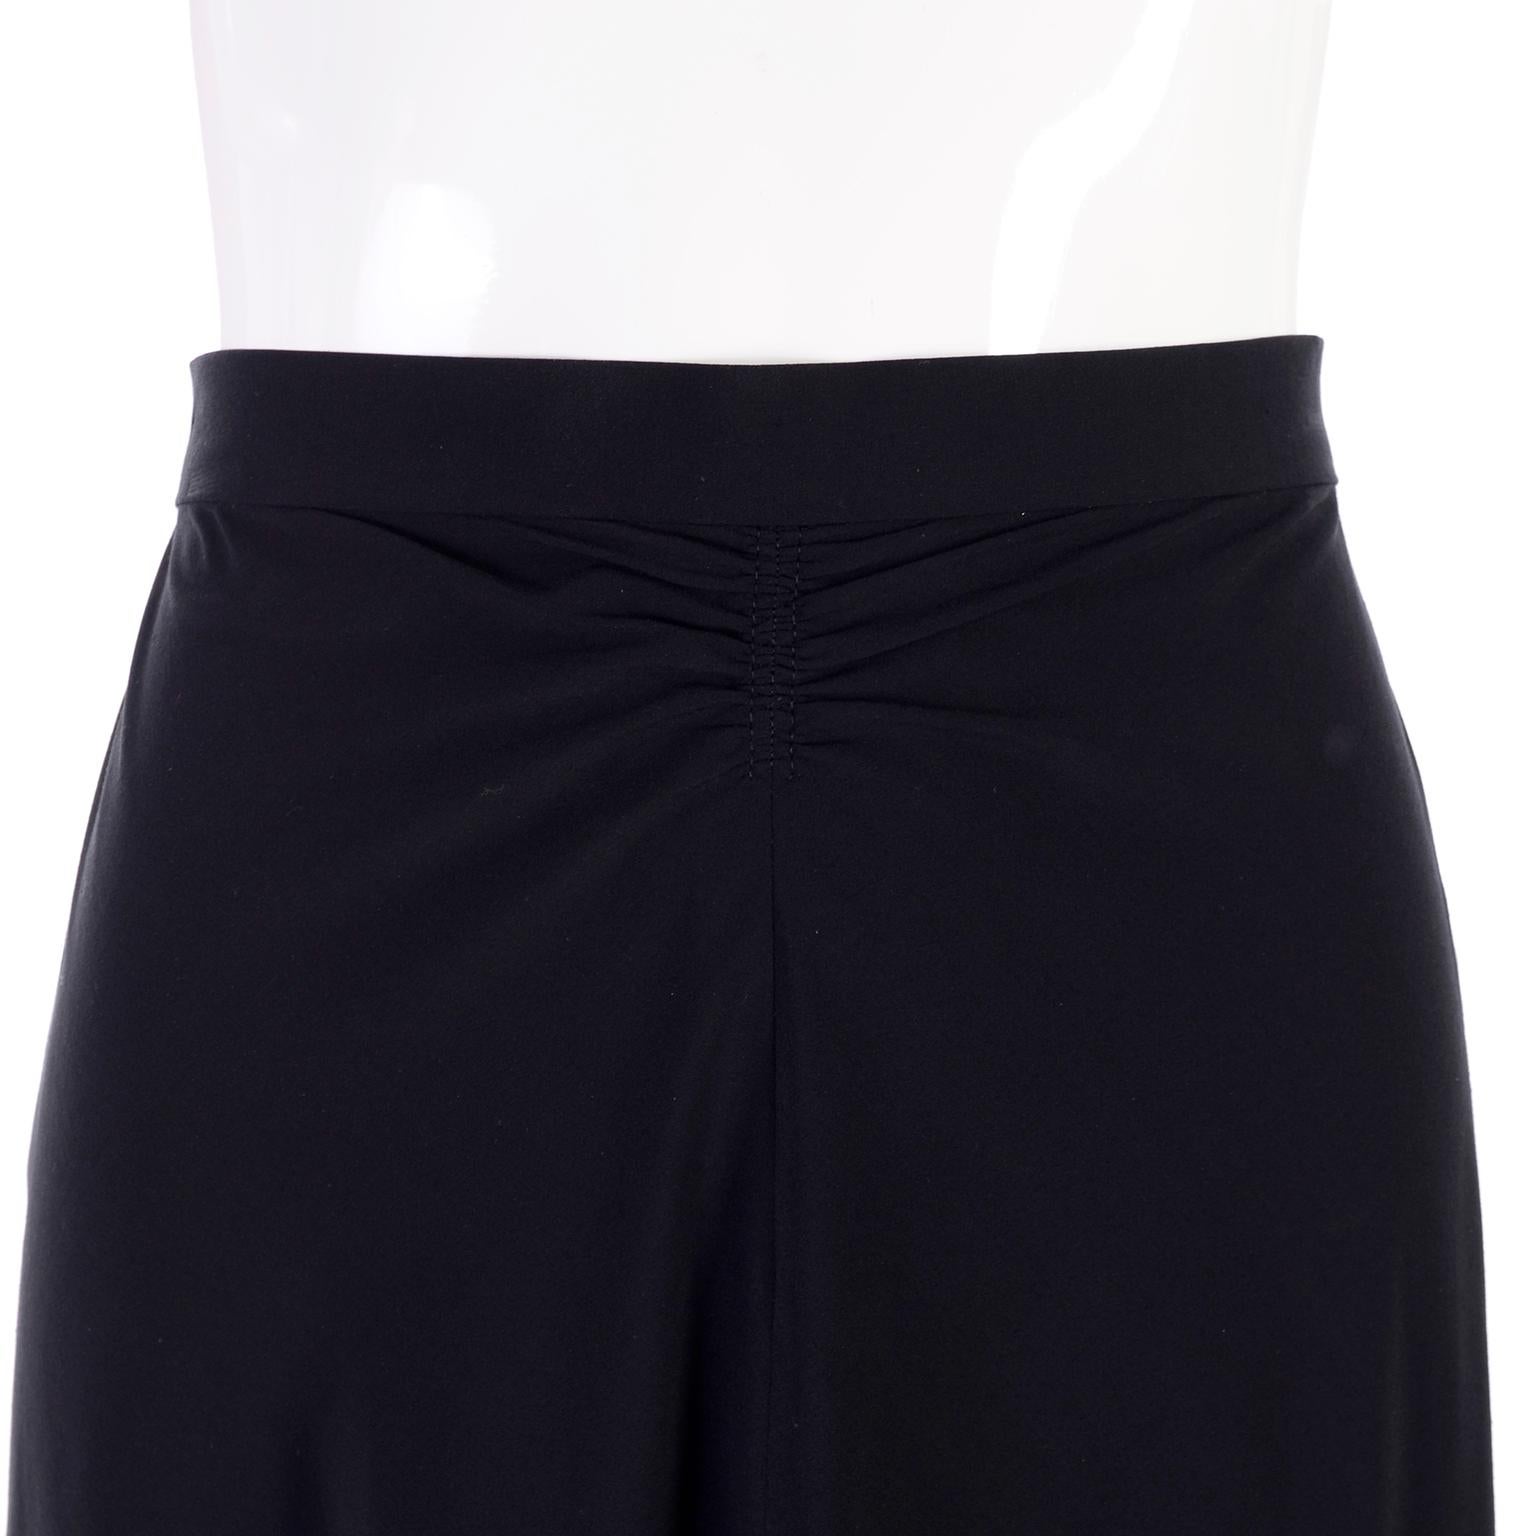 Women's 1999 Chanel Boutique Black Long Skirt Size 36